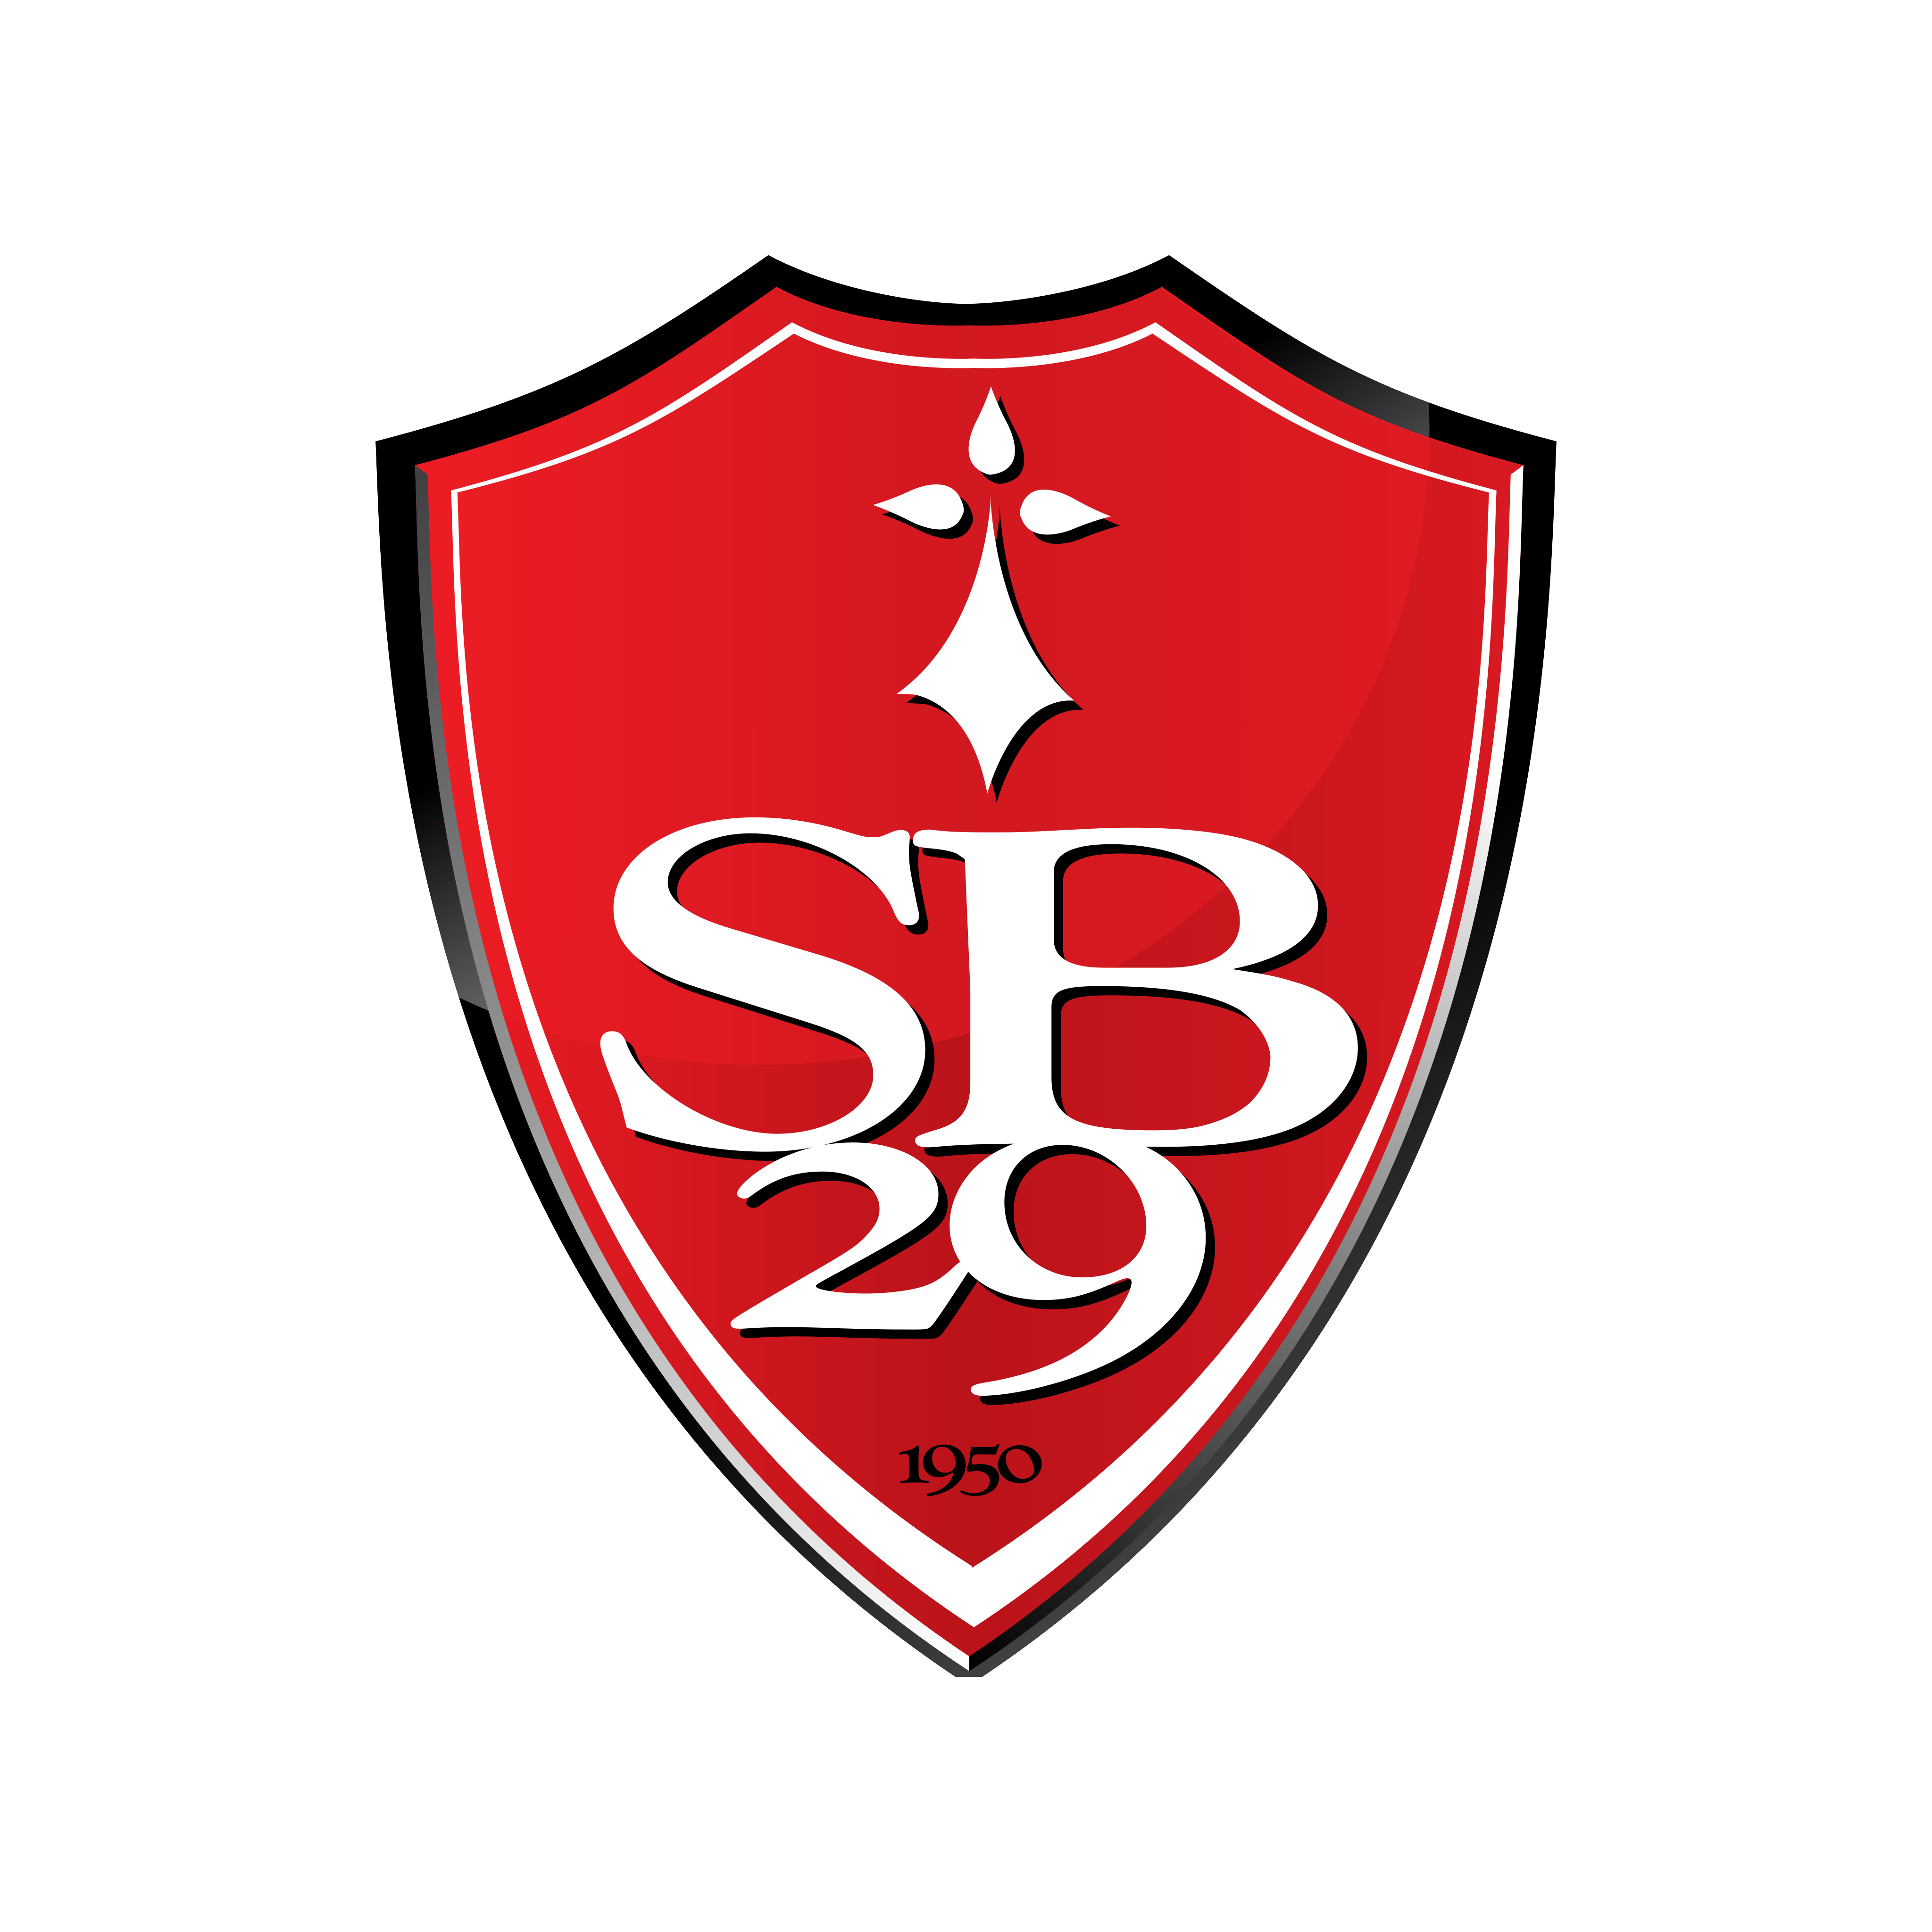 stade brestois 29 logo 0 - Stade Brestois 29 Logo